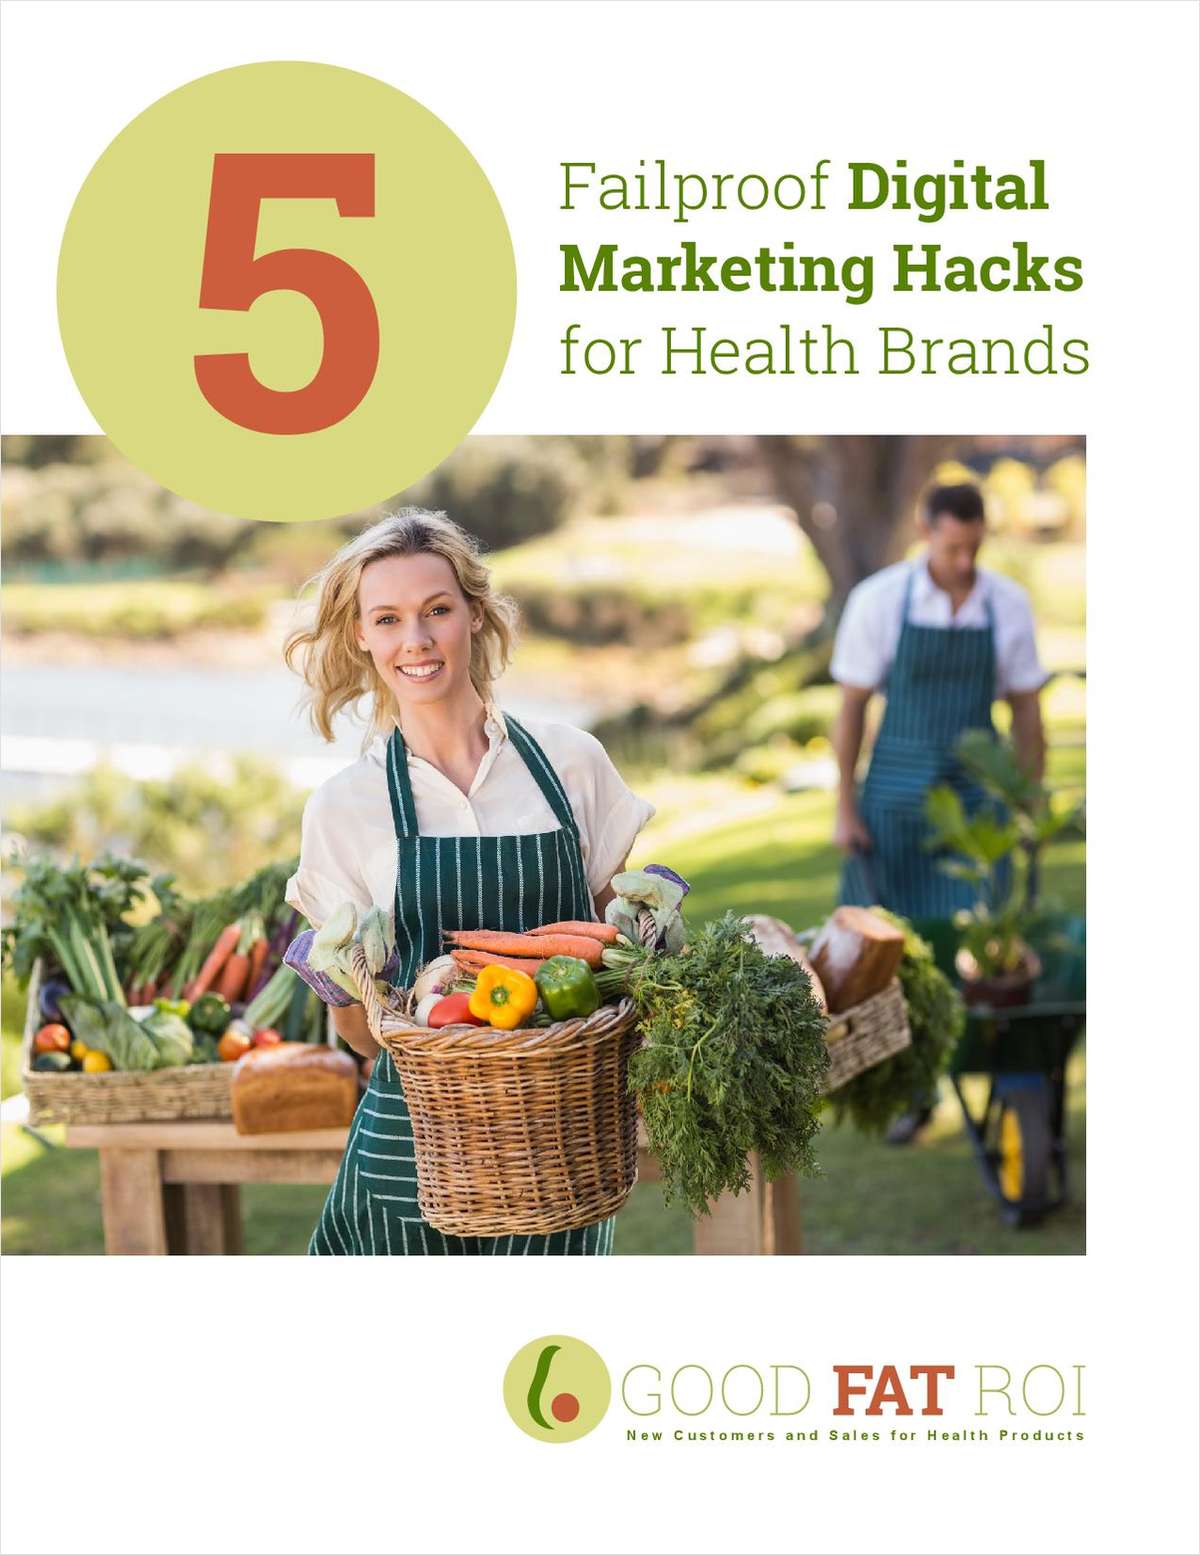 5 Failproof Digital Marketing Hacks for Health Brands